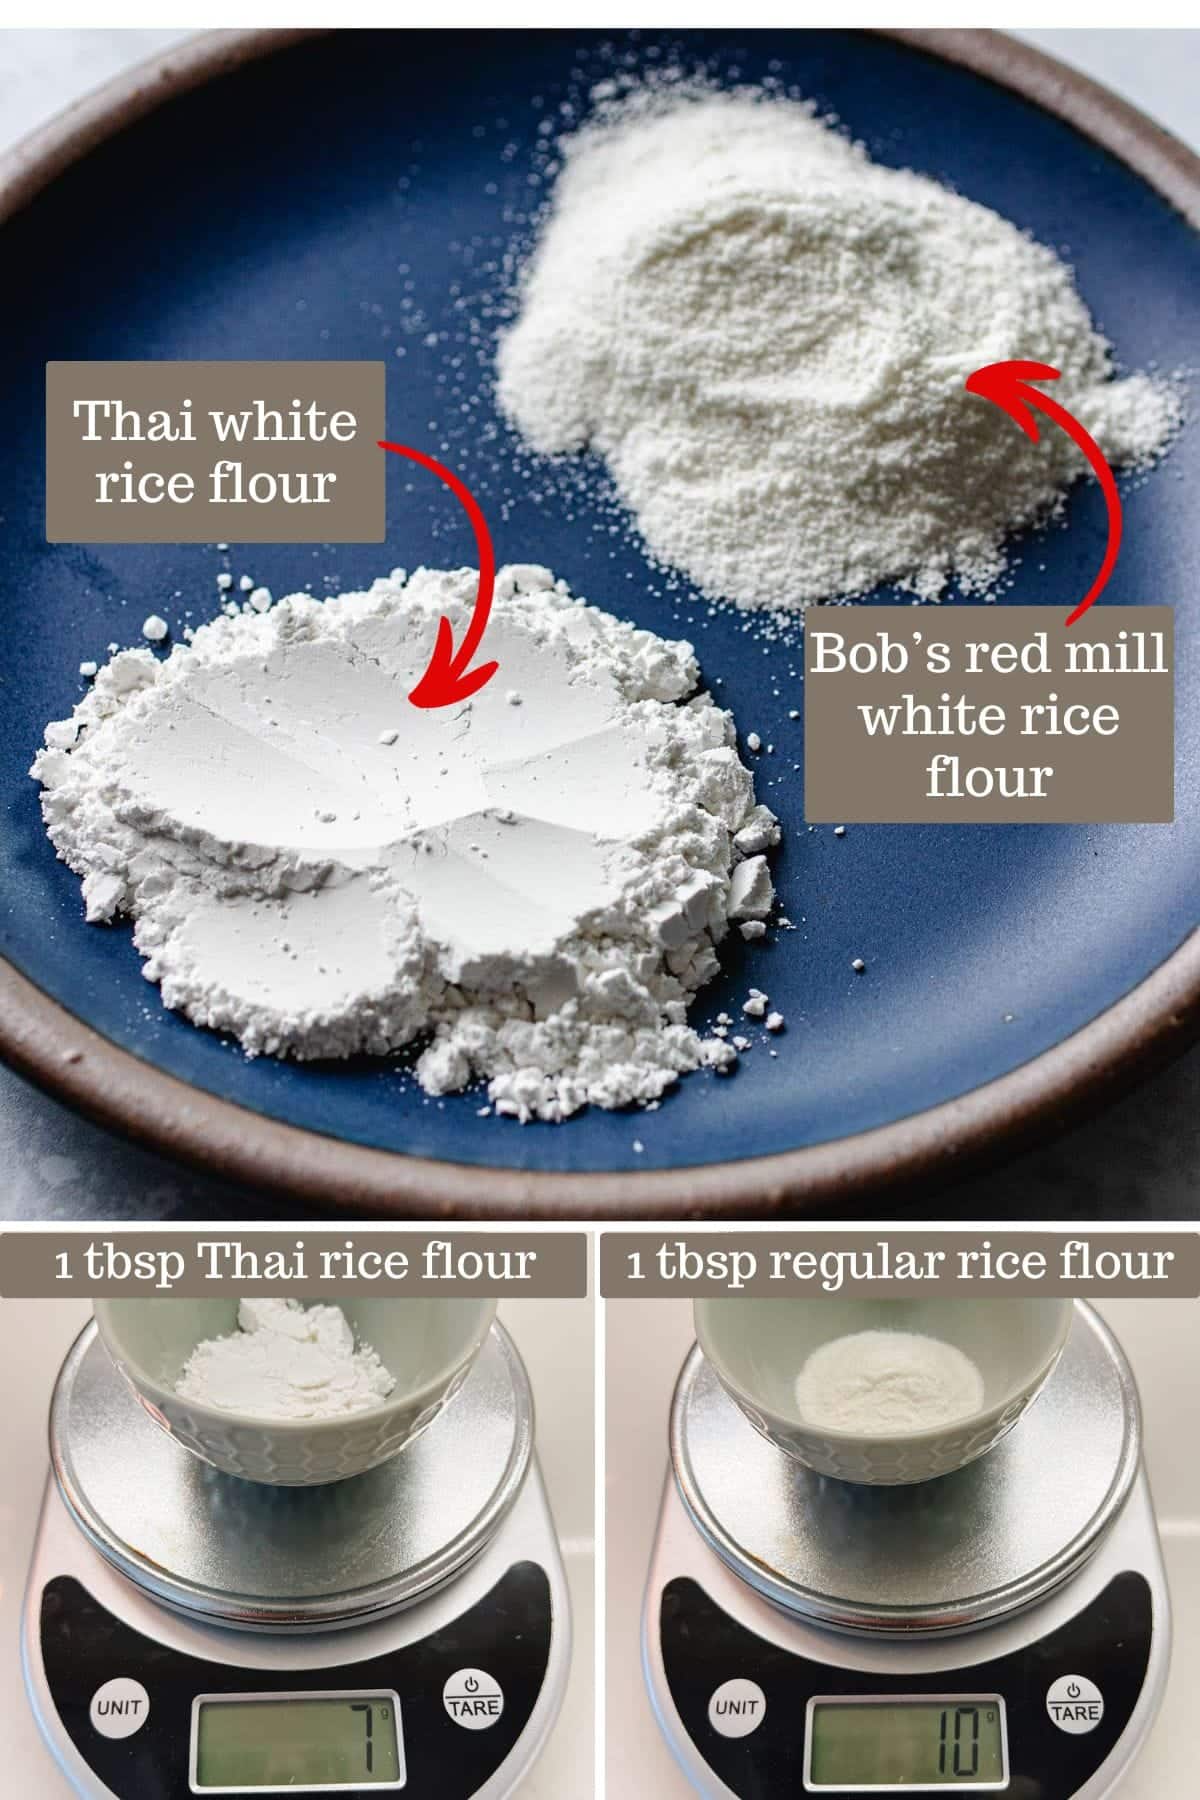 Photo display shows a comparison between Thai white rice flour bland vs. Regular white rice flour bland.